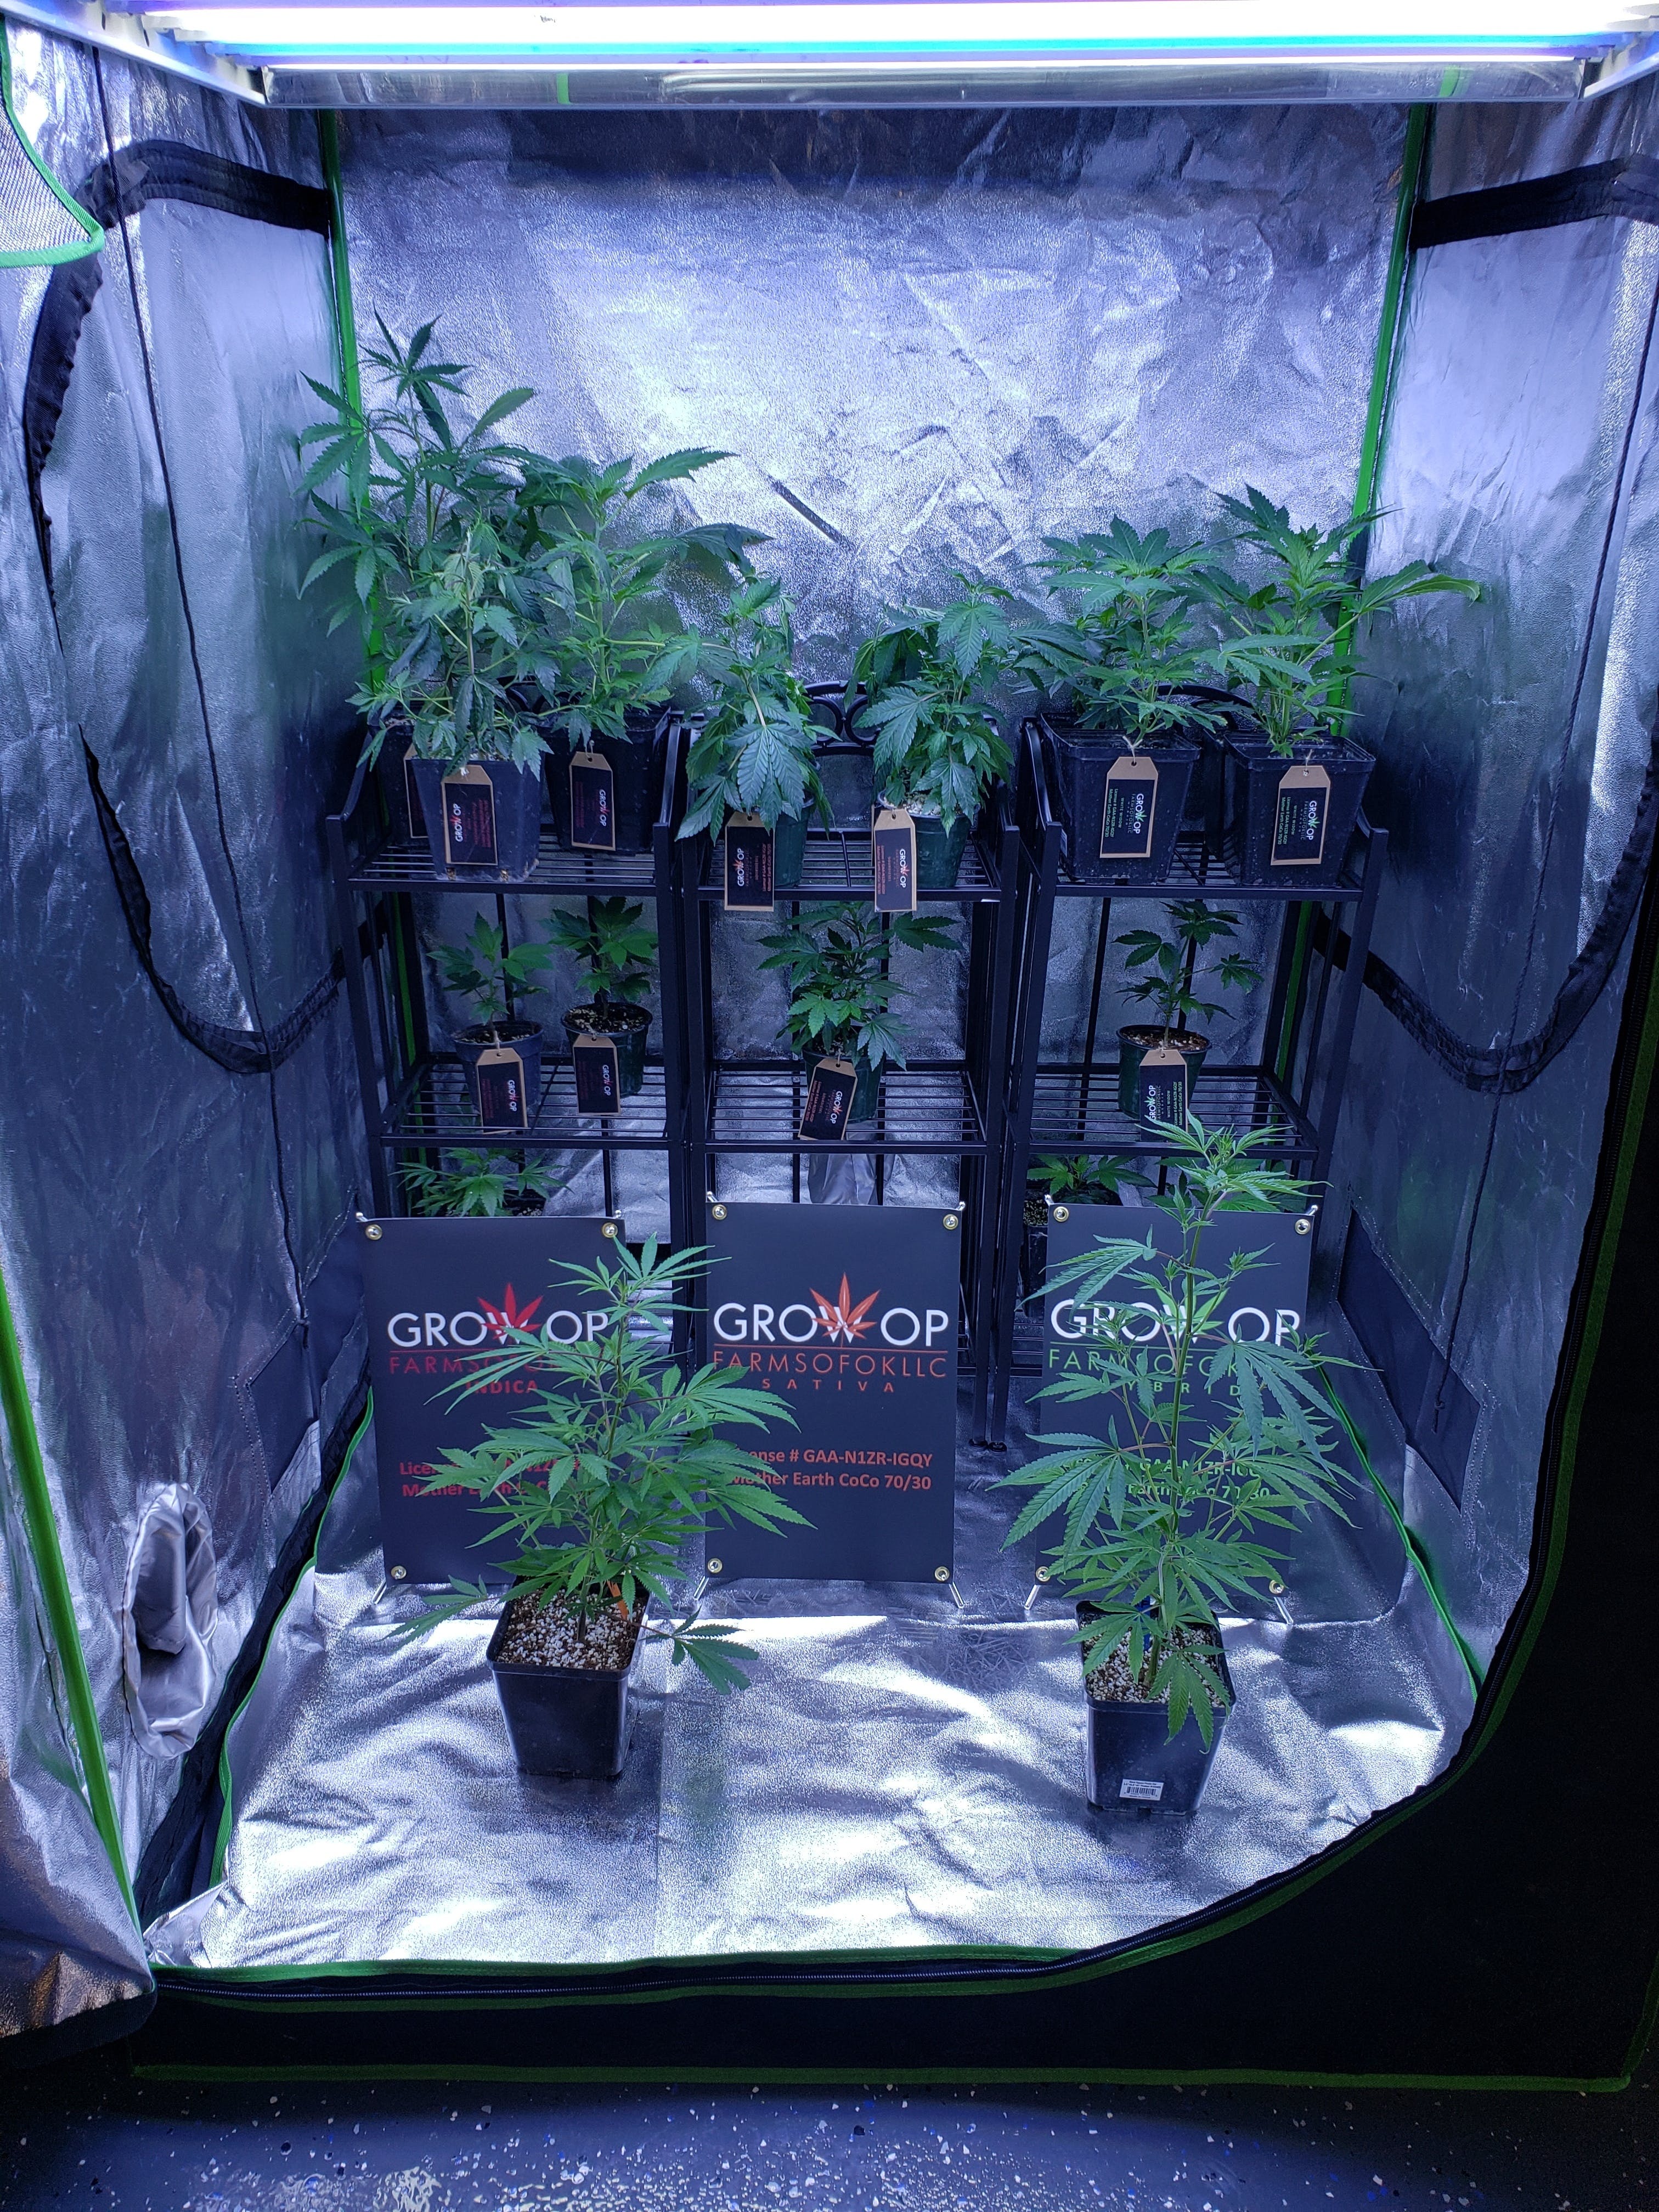 marijuana-dispensaries-lucky-monkey-buds-grand-opening-21-21-21-in-trinidad-clones